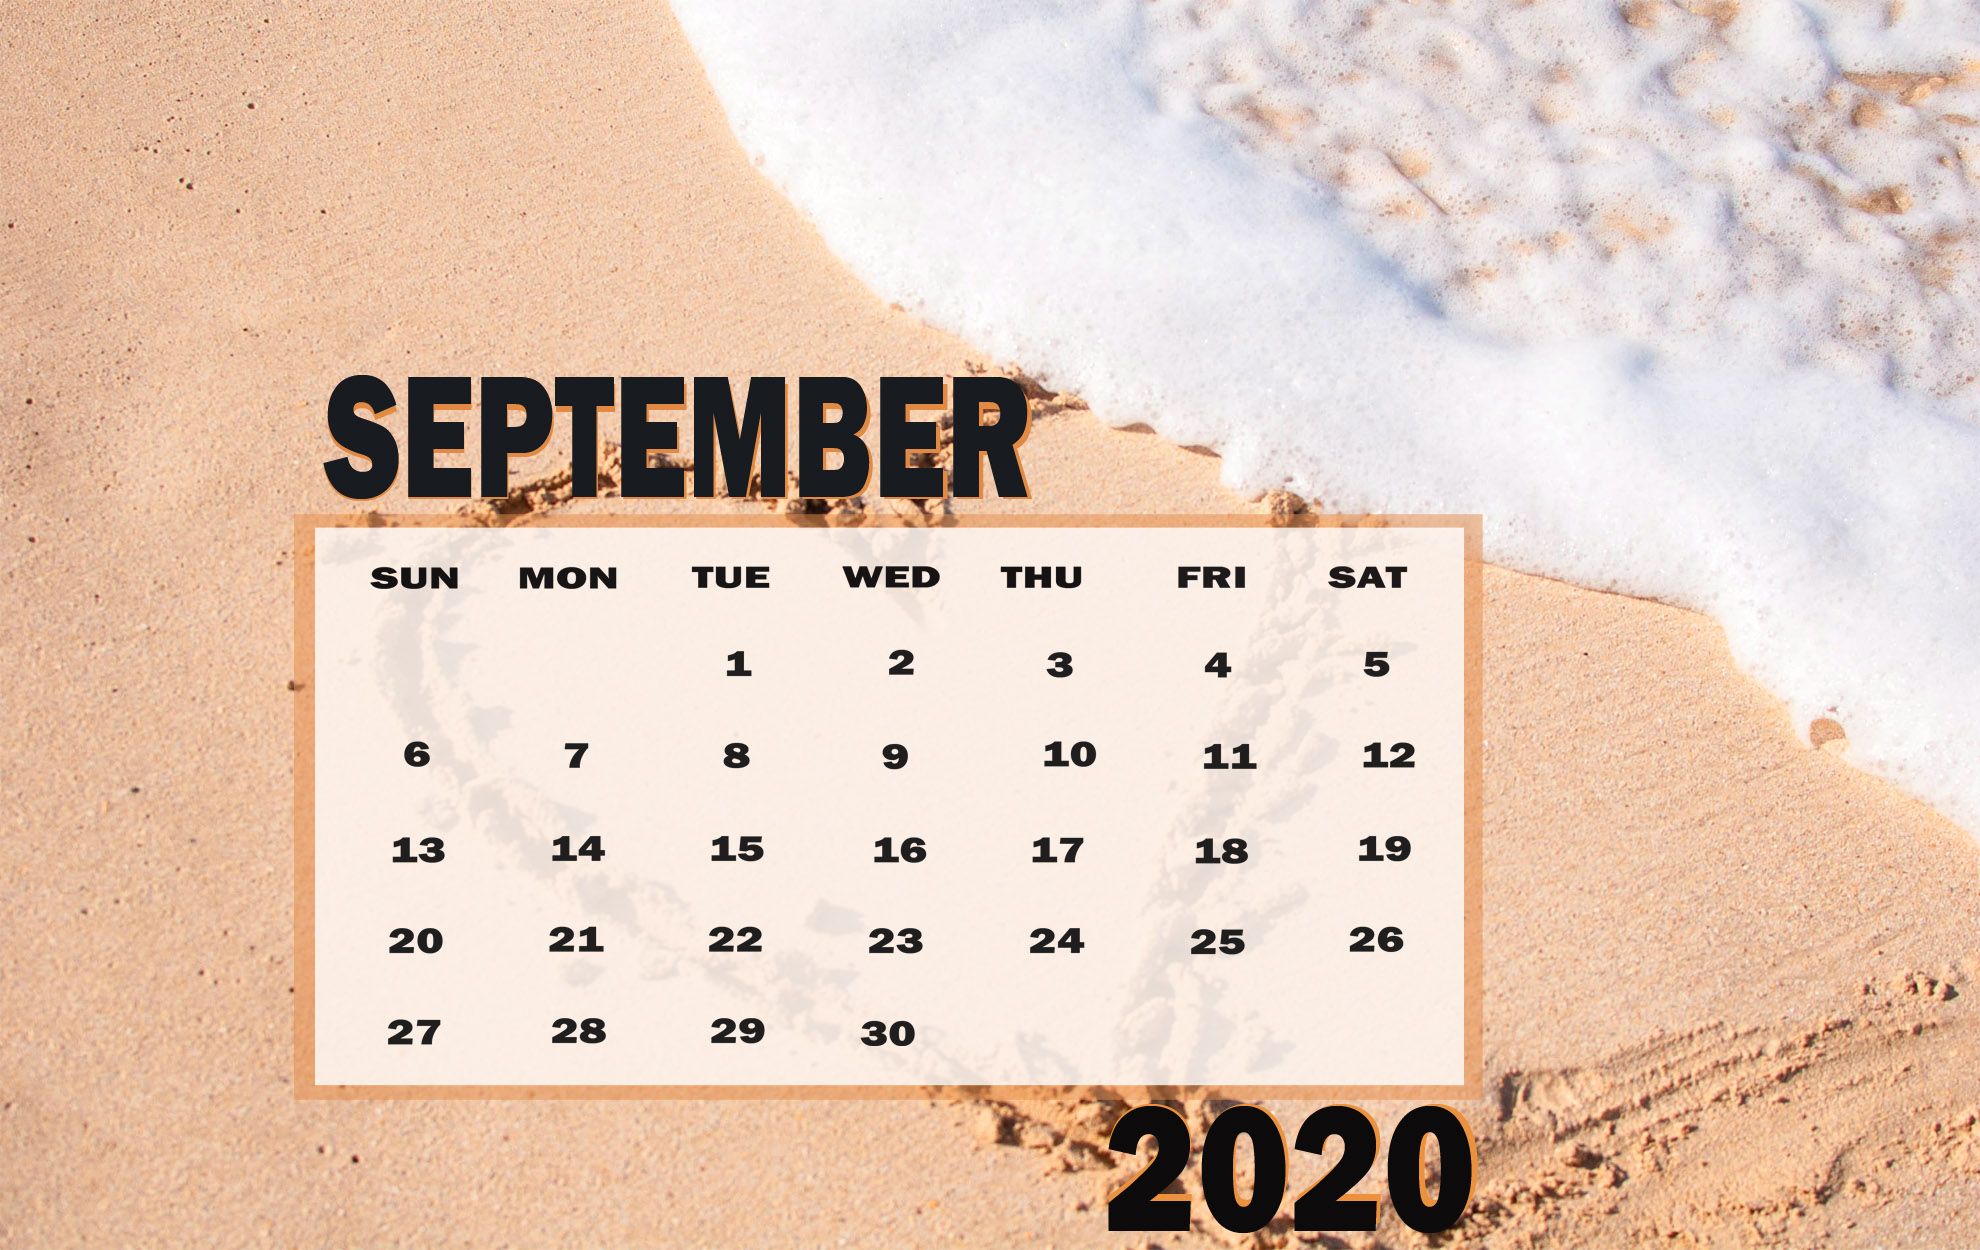 September 2020 Calendar Wallpaper For Desktop & iPhone